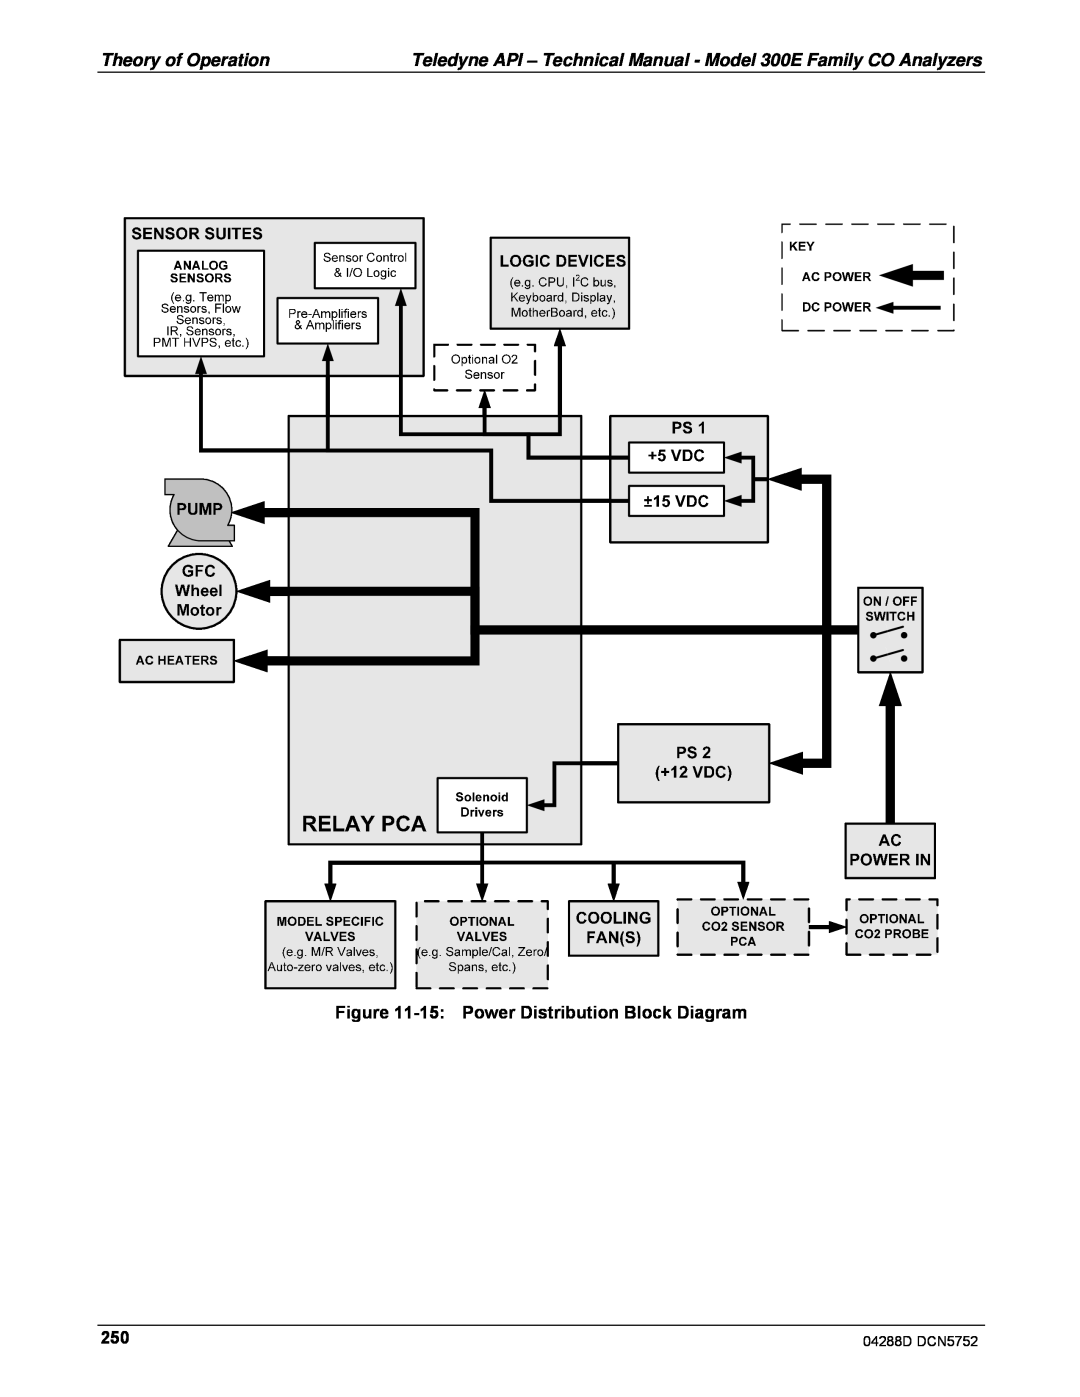 Teledyne M300EM operation manual Theory of Operation, 15:Power Distribution Block Diagram 